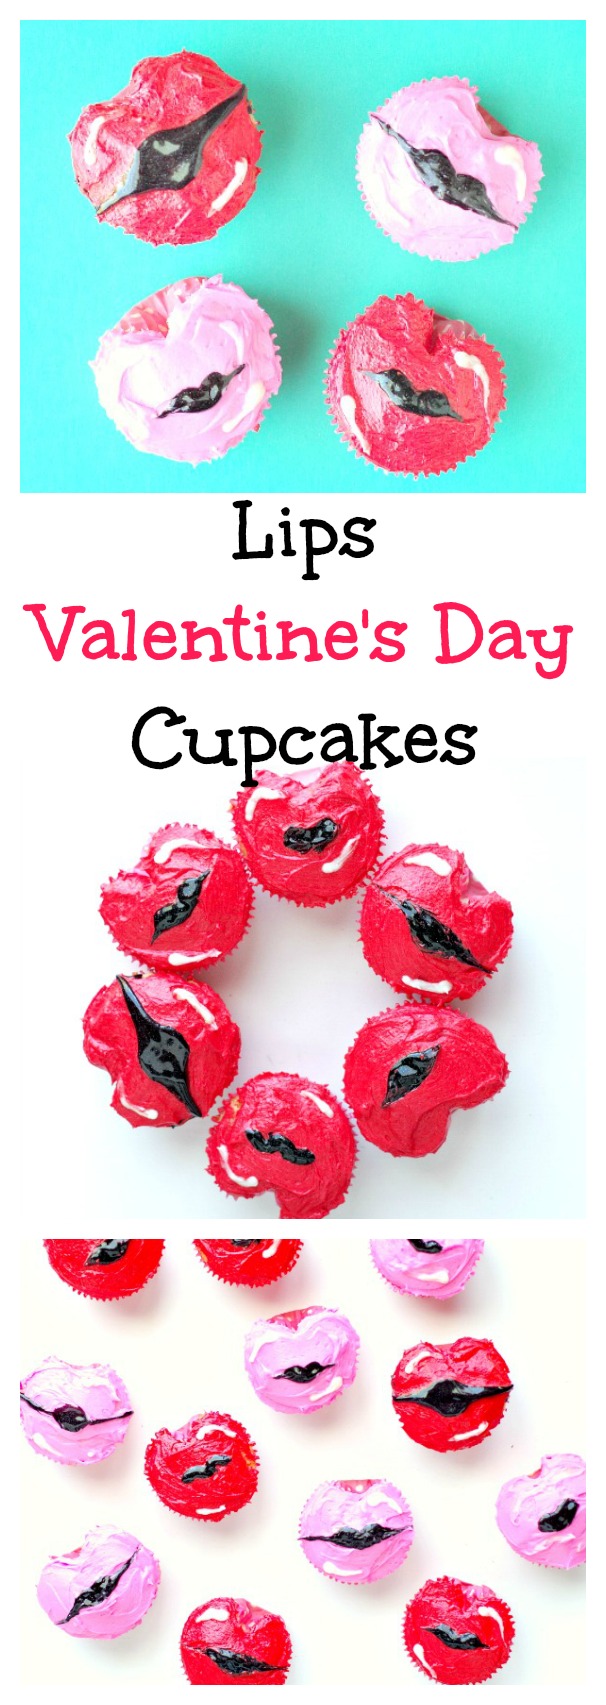 Lips Valentine's Day Cupcakes